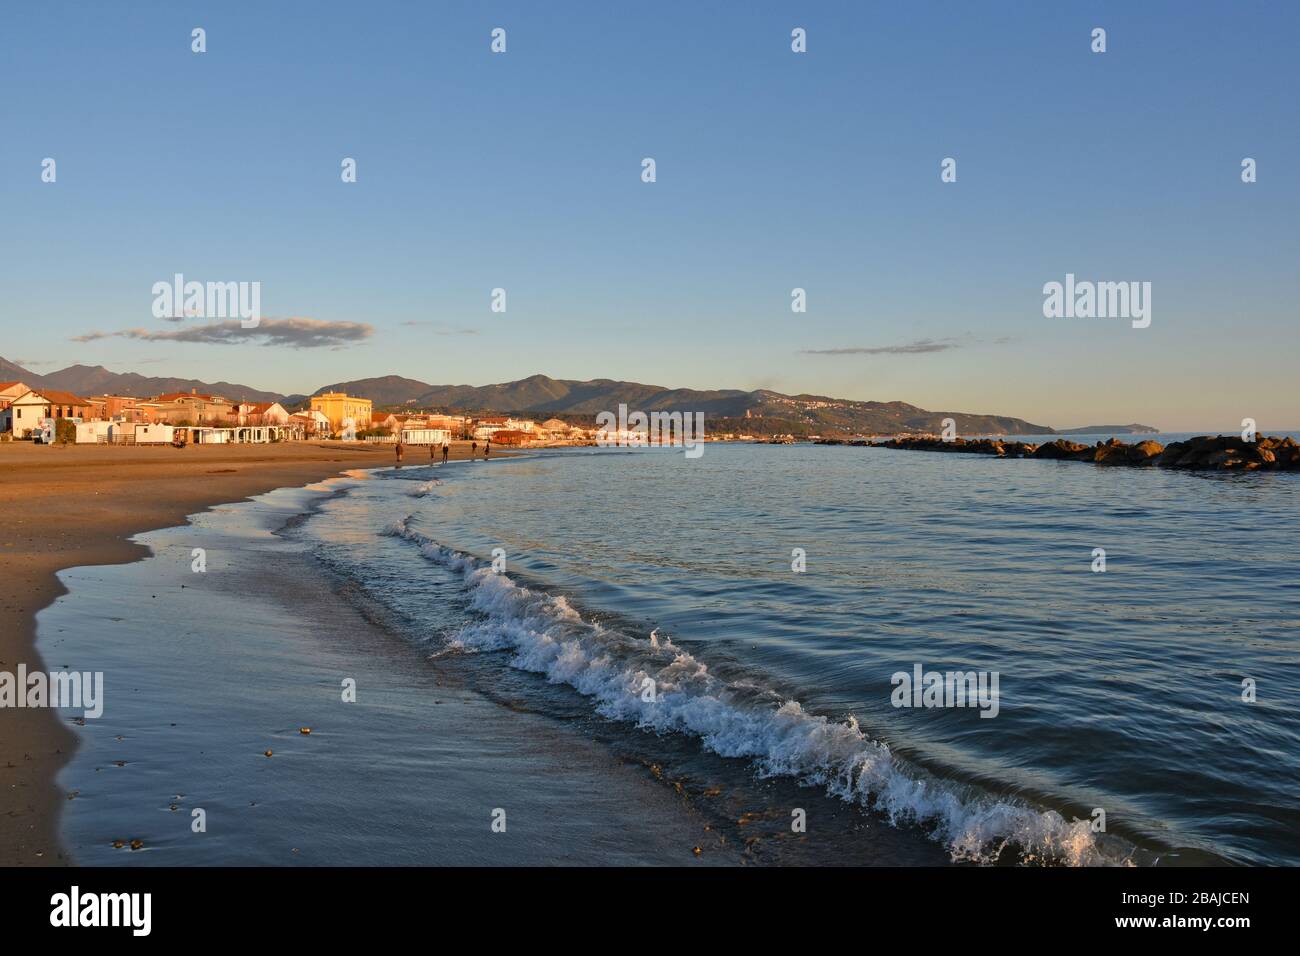 A beach in the Cilento region in Italy Stock Photo